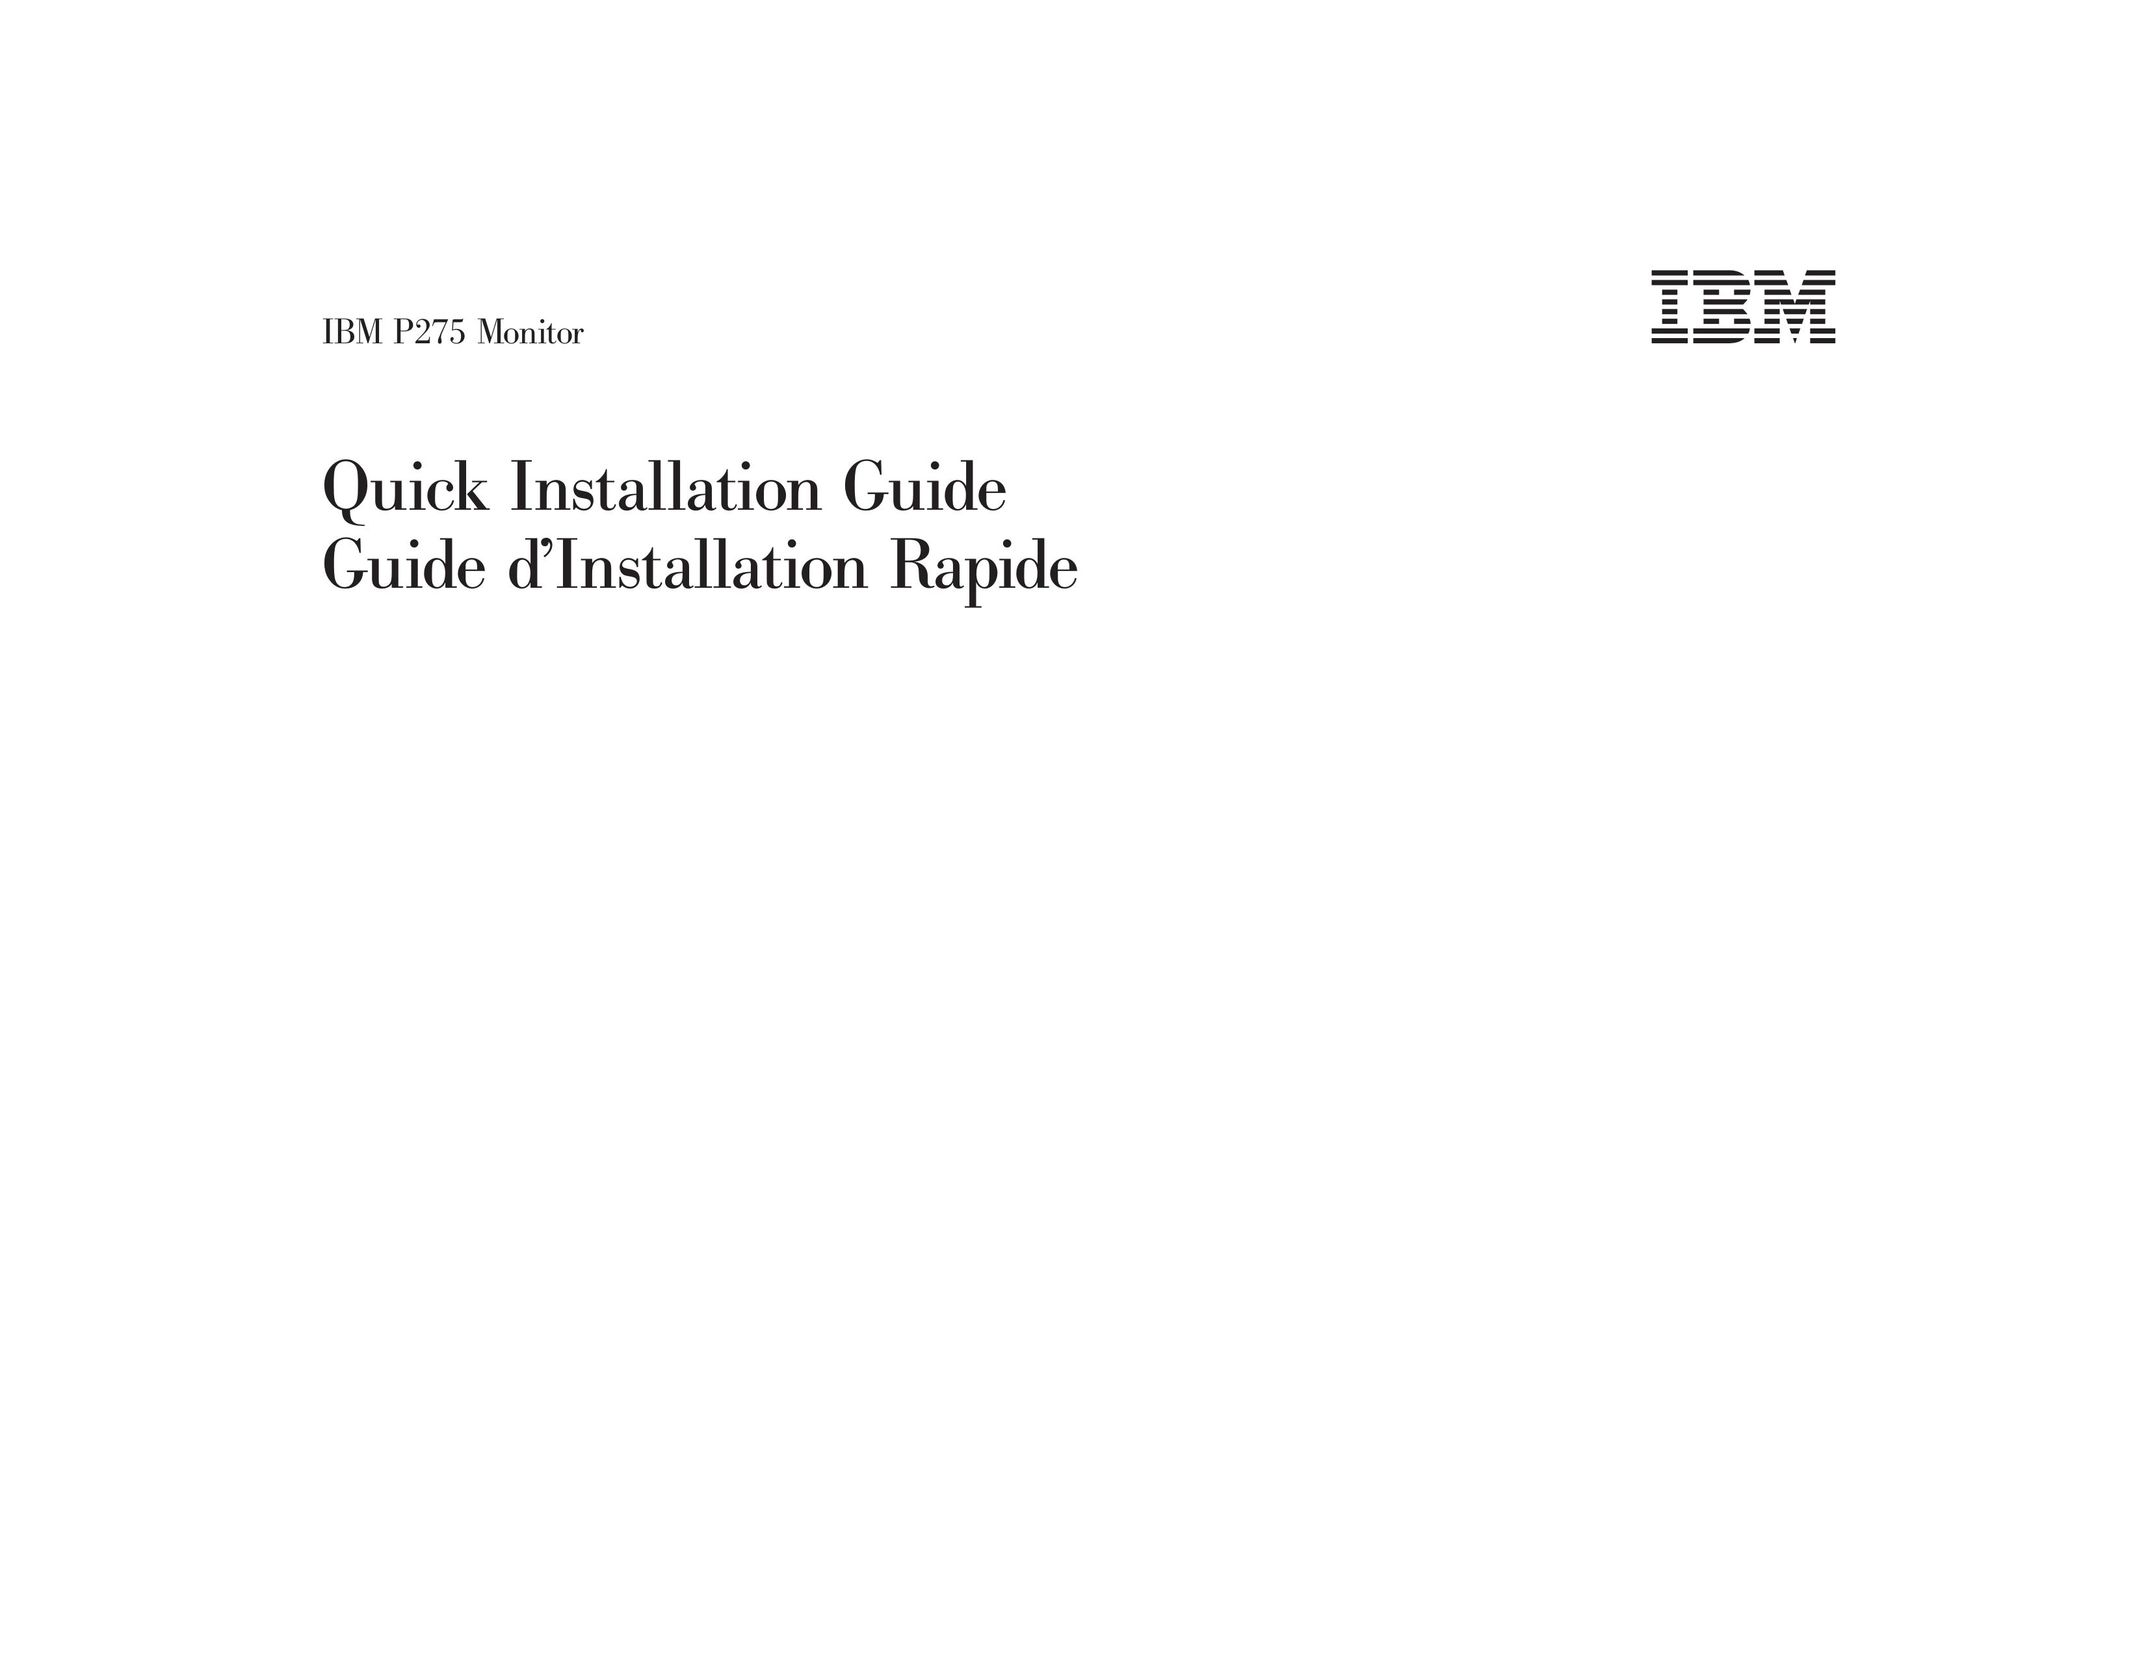 IBM 275 Computer Monitor User Manual (Page 1)